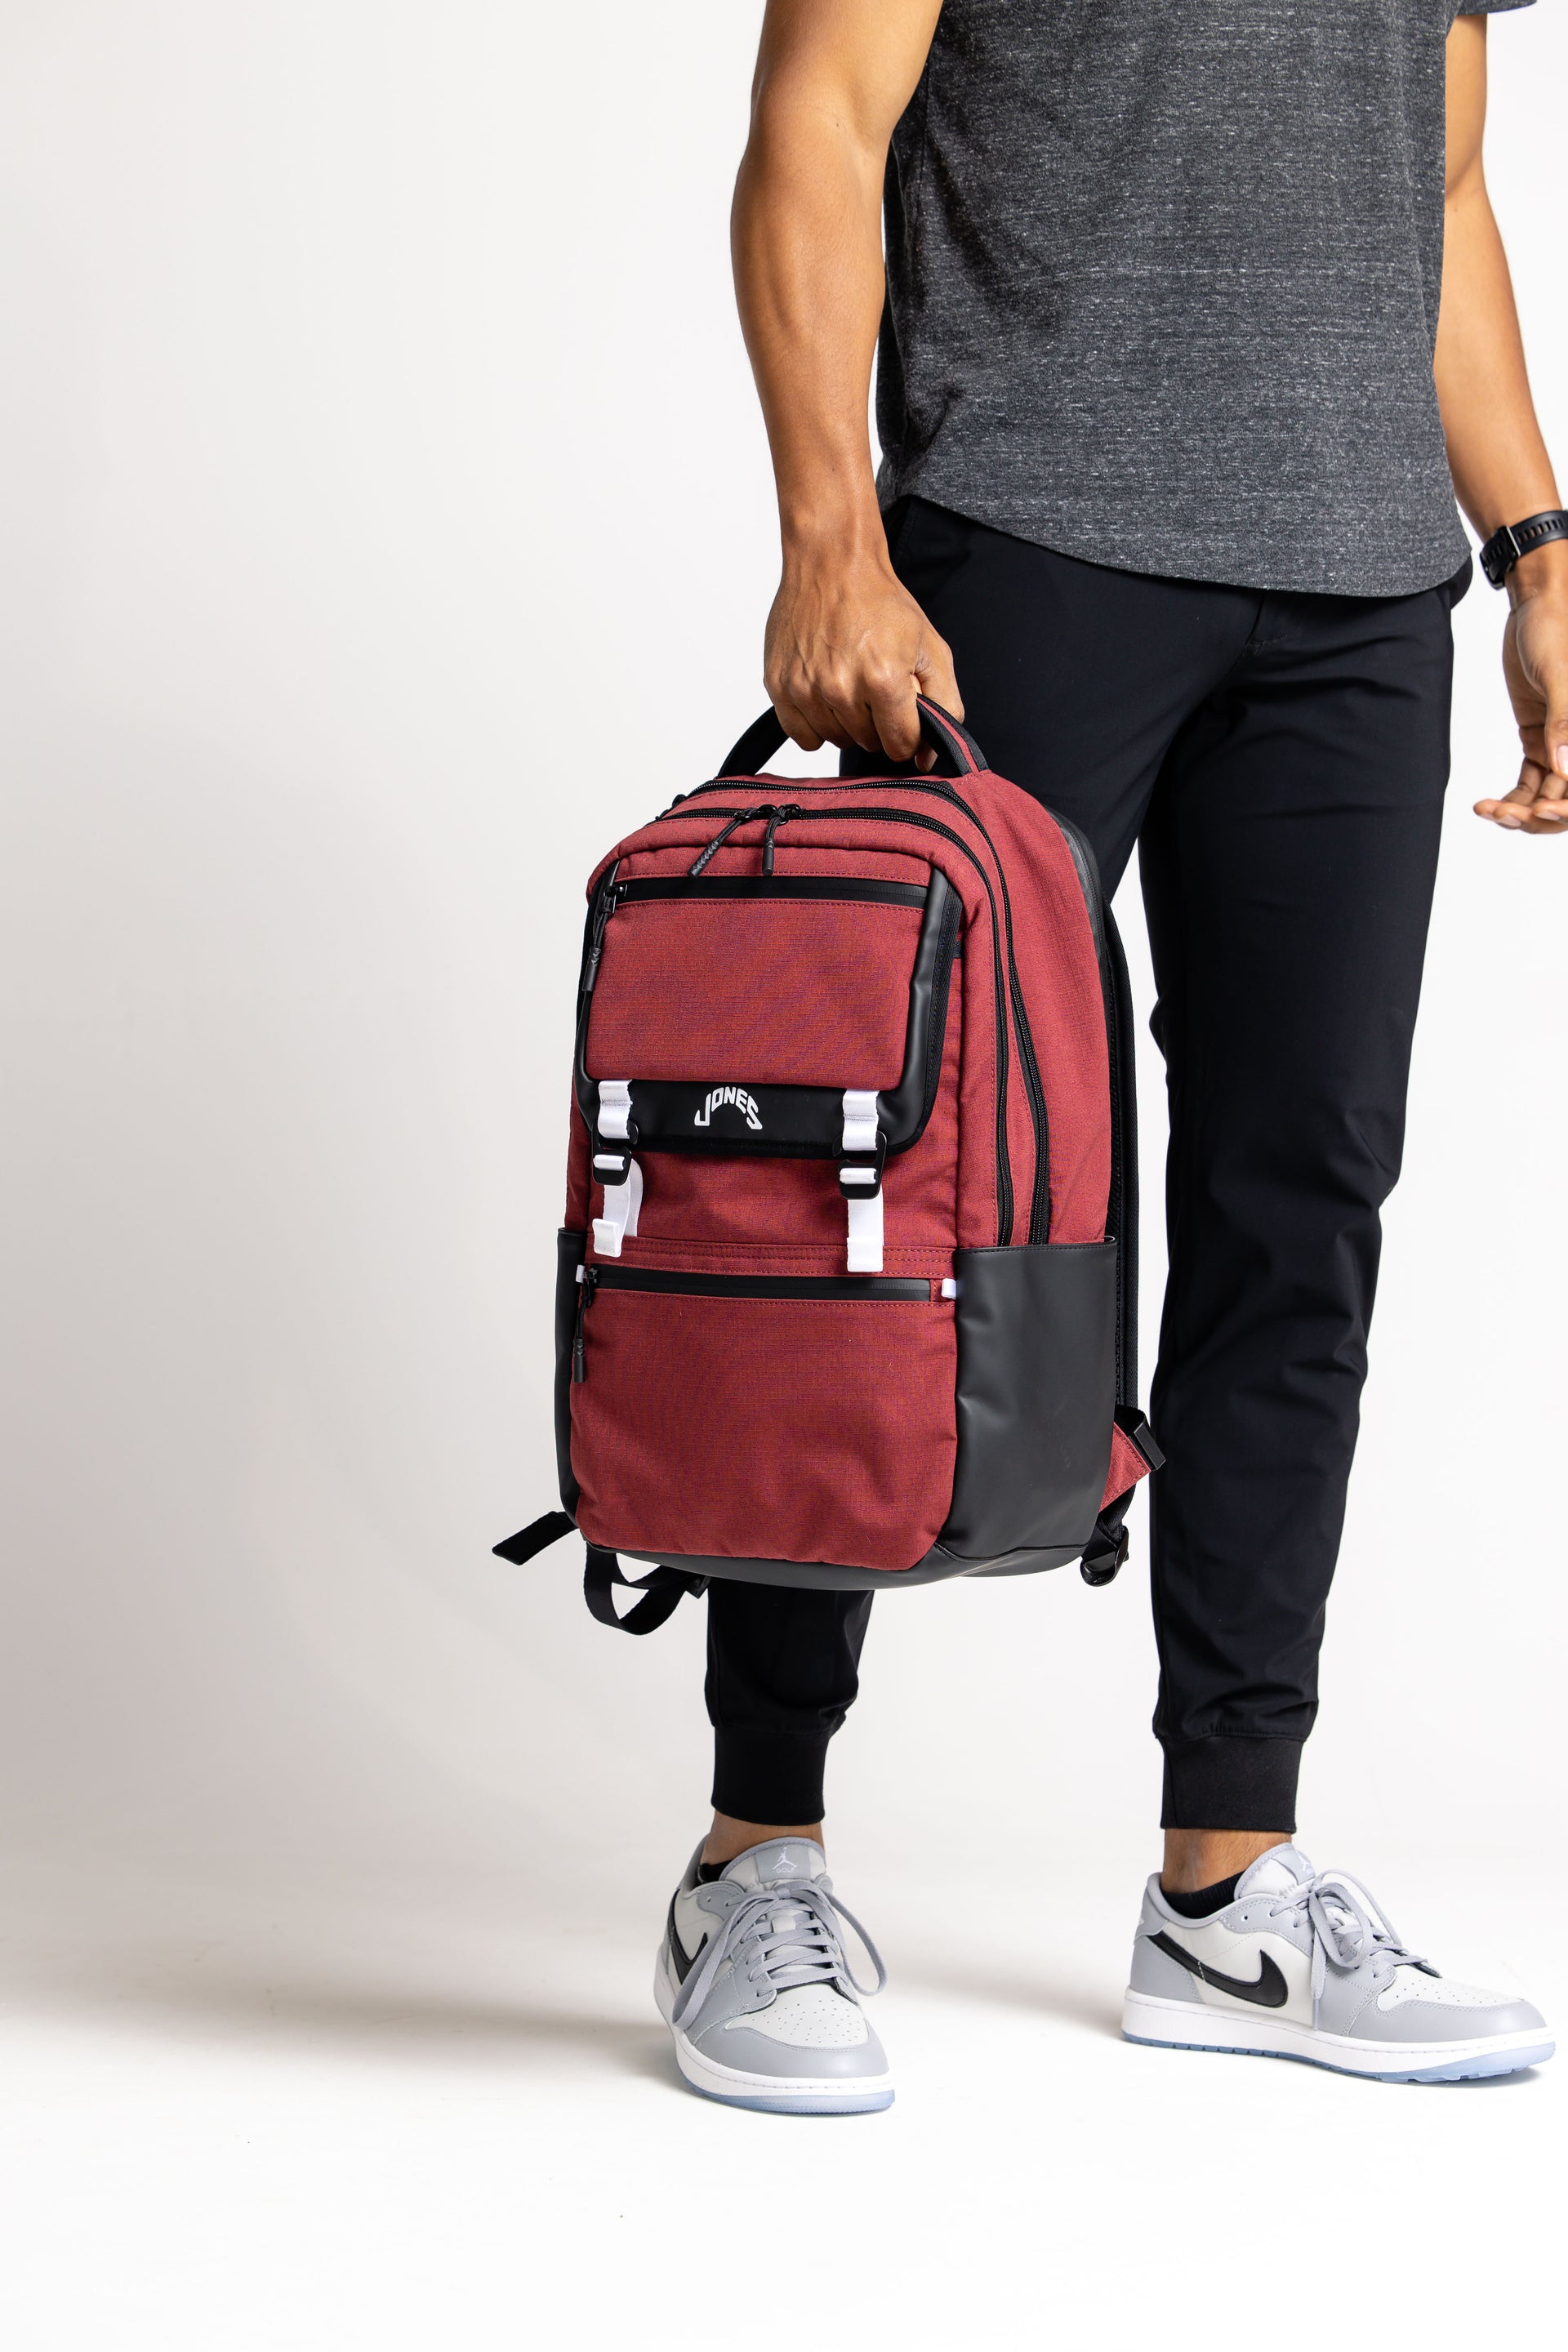 A2 Backpacks – Jones Golf Bags